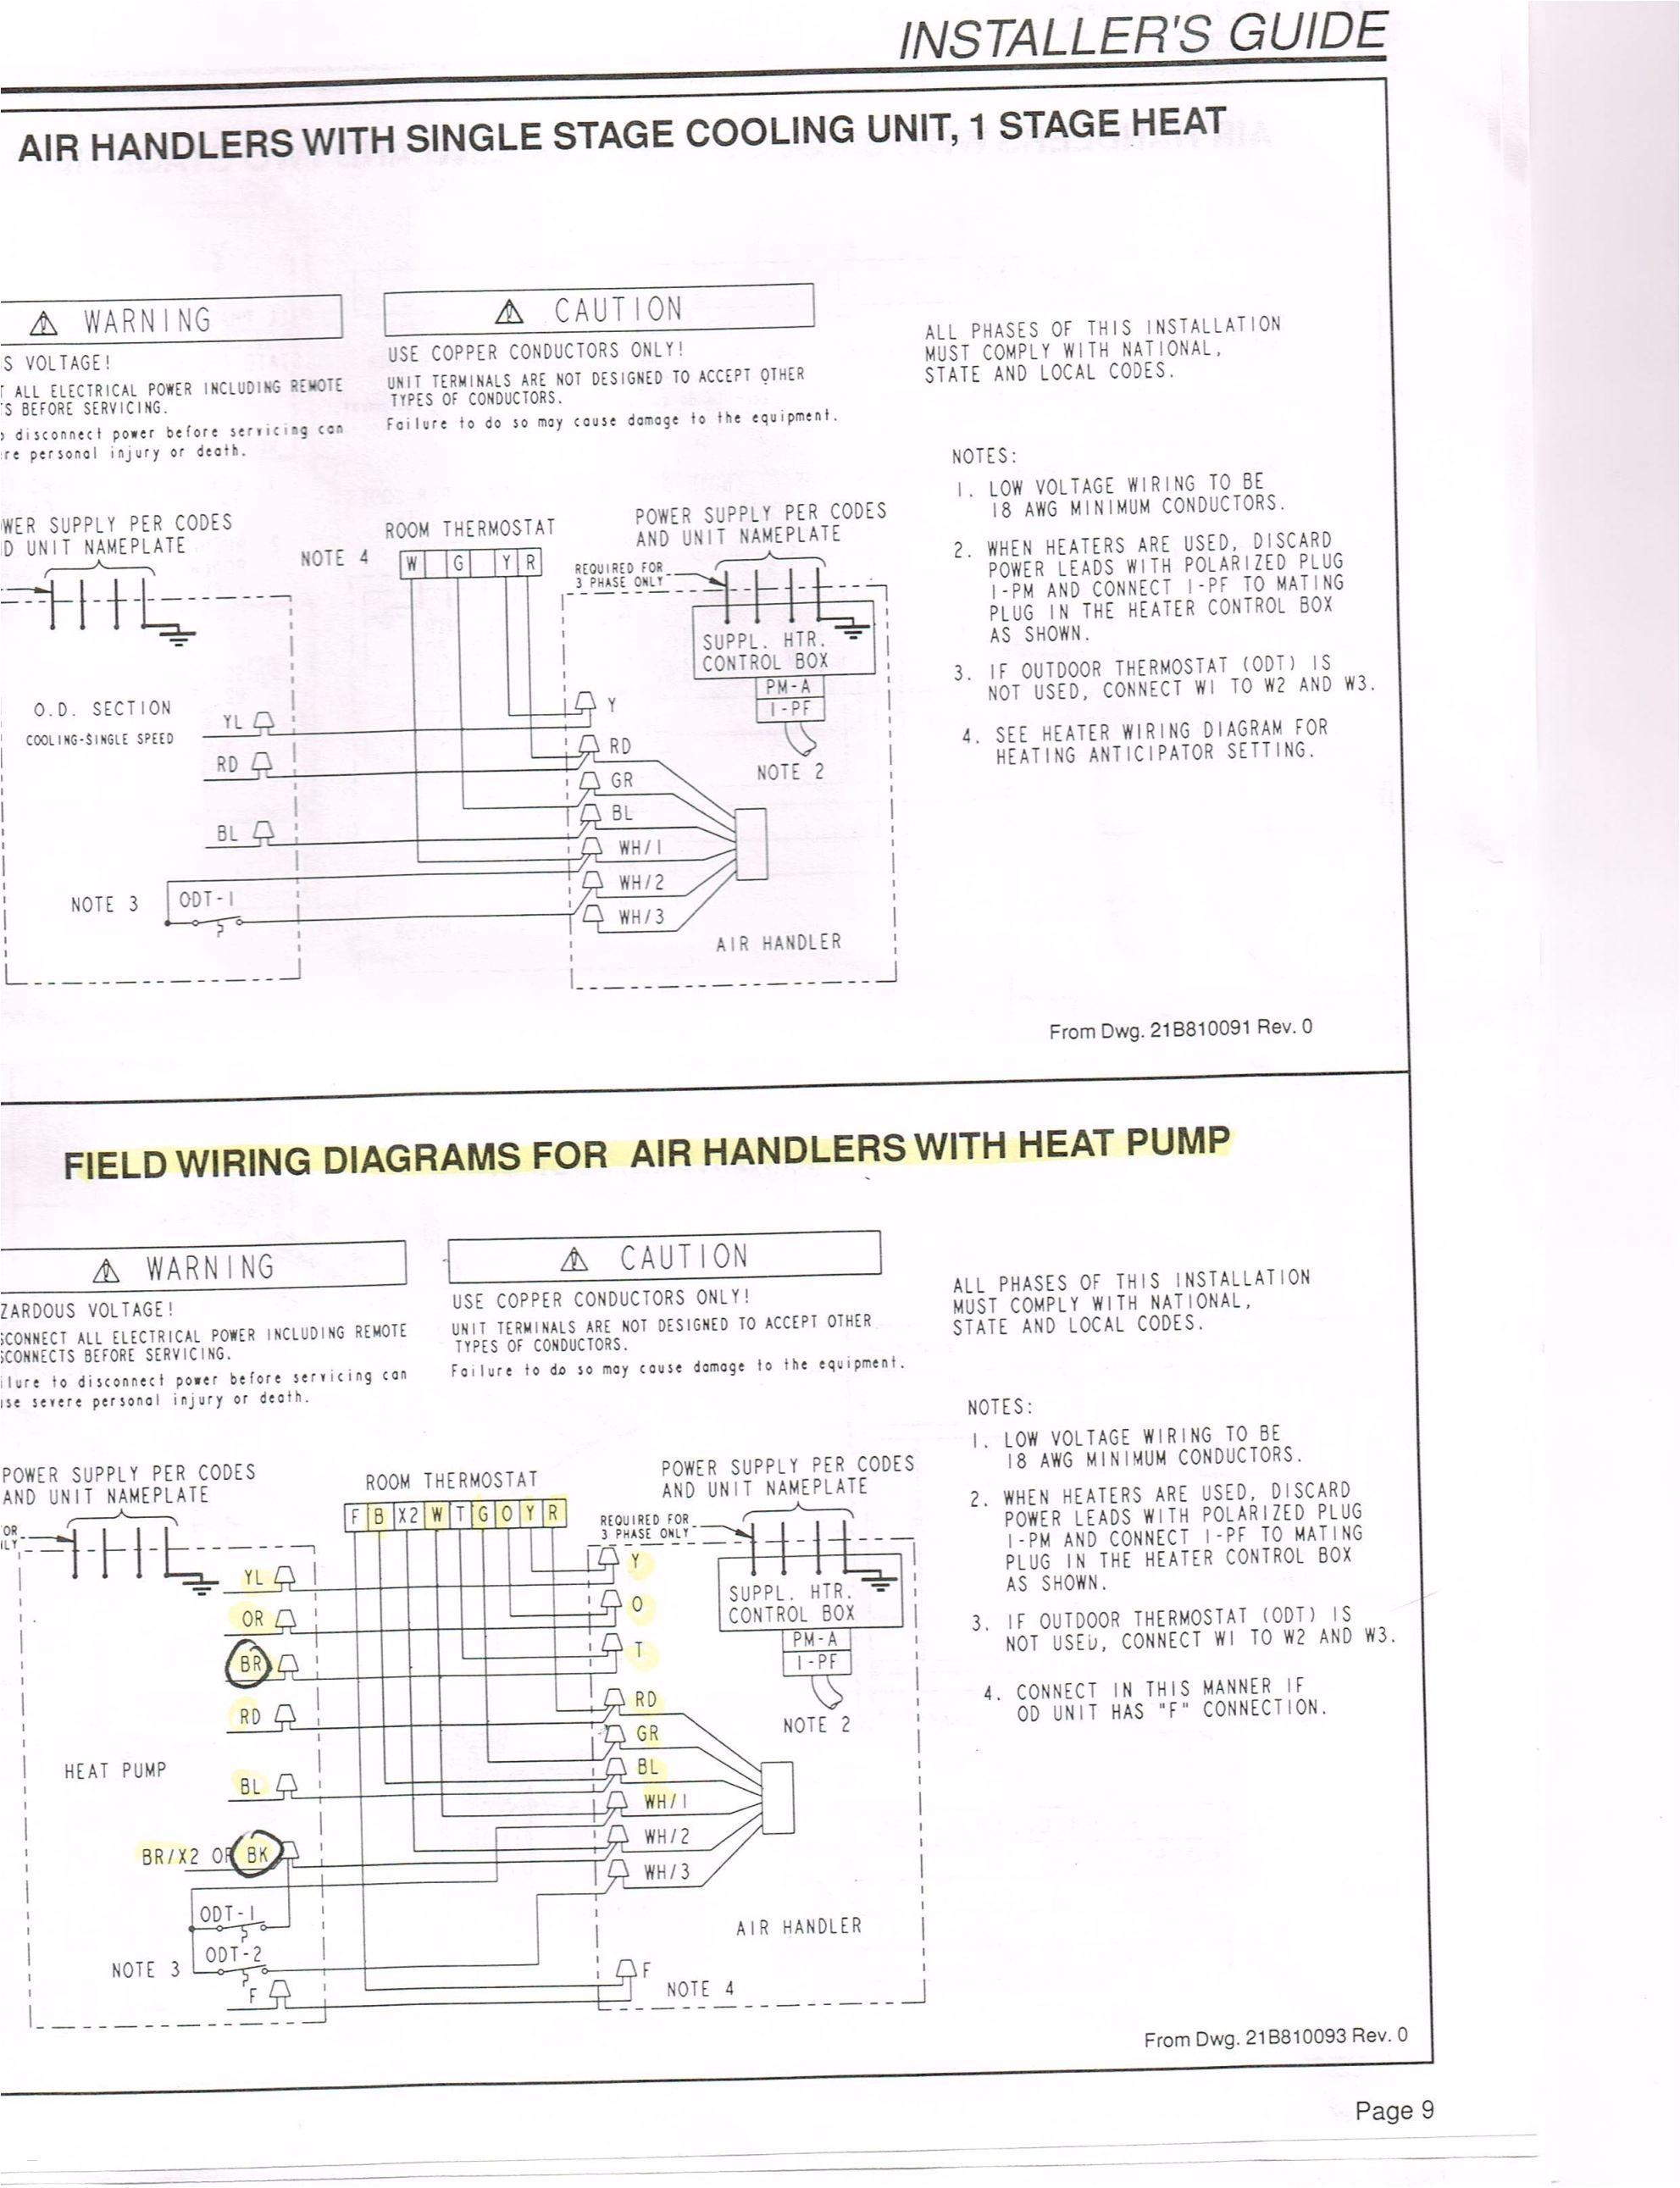 relay base wiring diagram luxury potter brumfield relay wiring diagrams 5 10 buchner